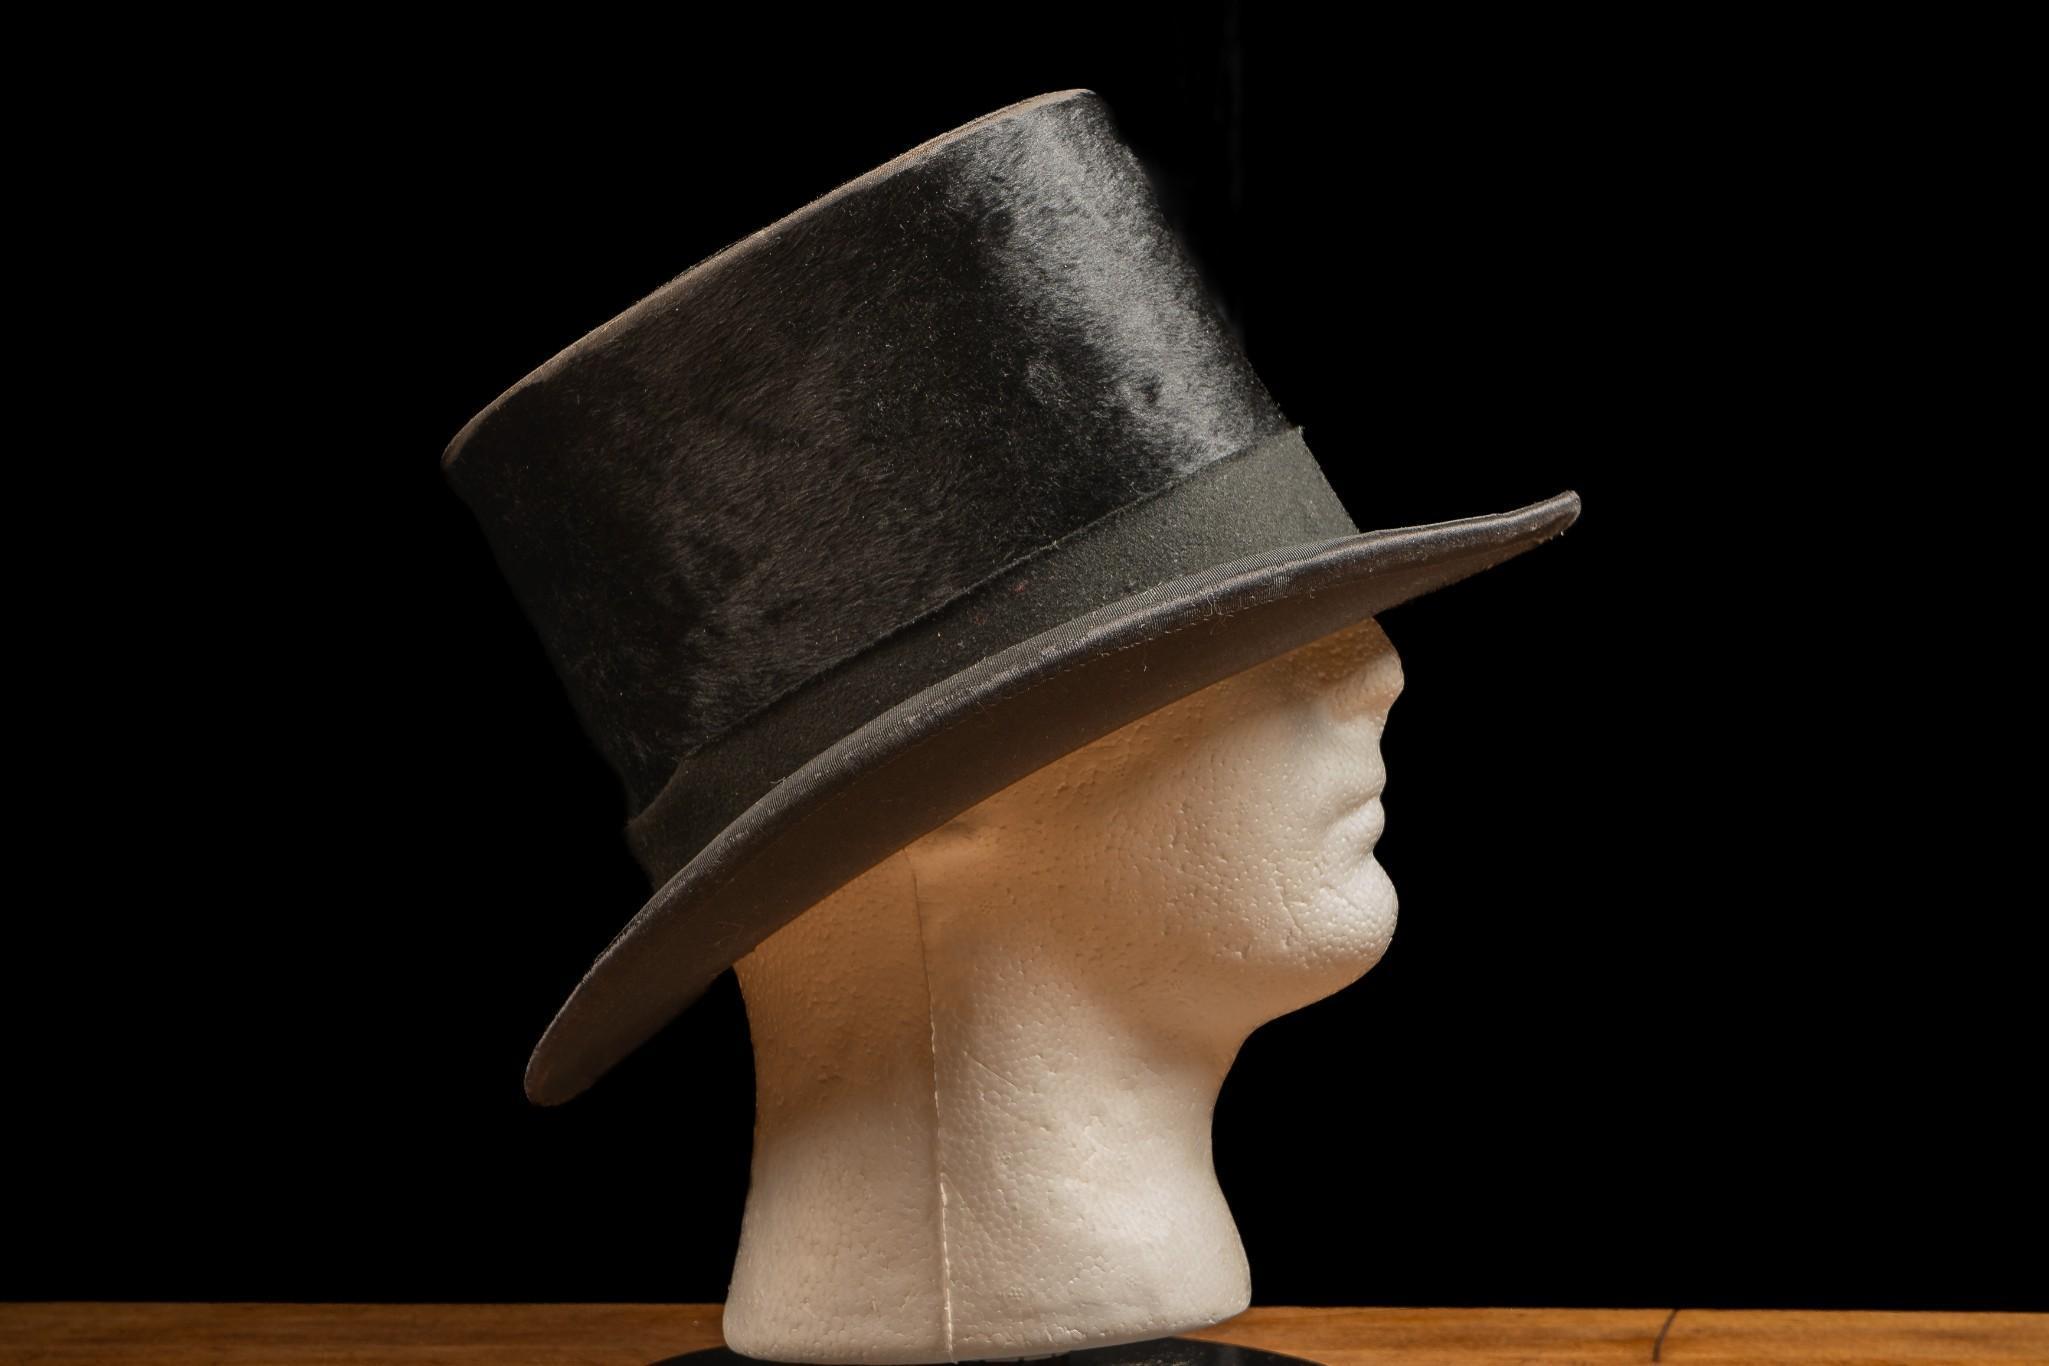 Early 20th Century Pollitt Mallin Hat Co. Beaver Stovepipe Hat